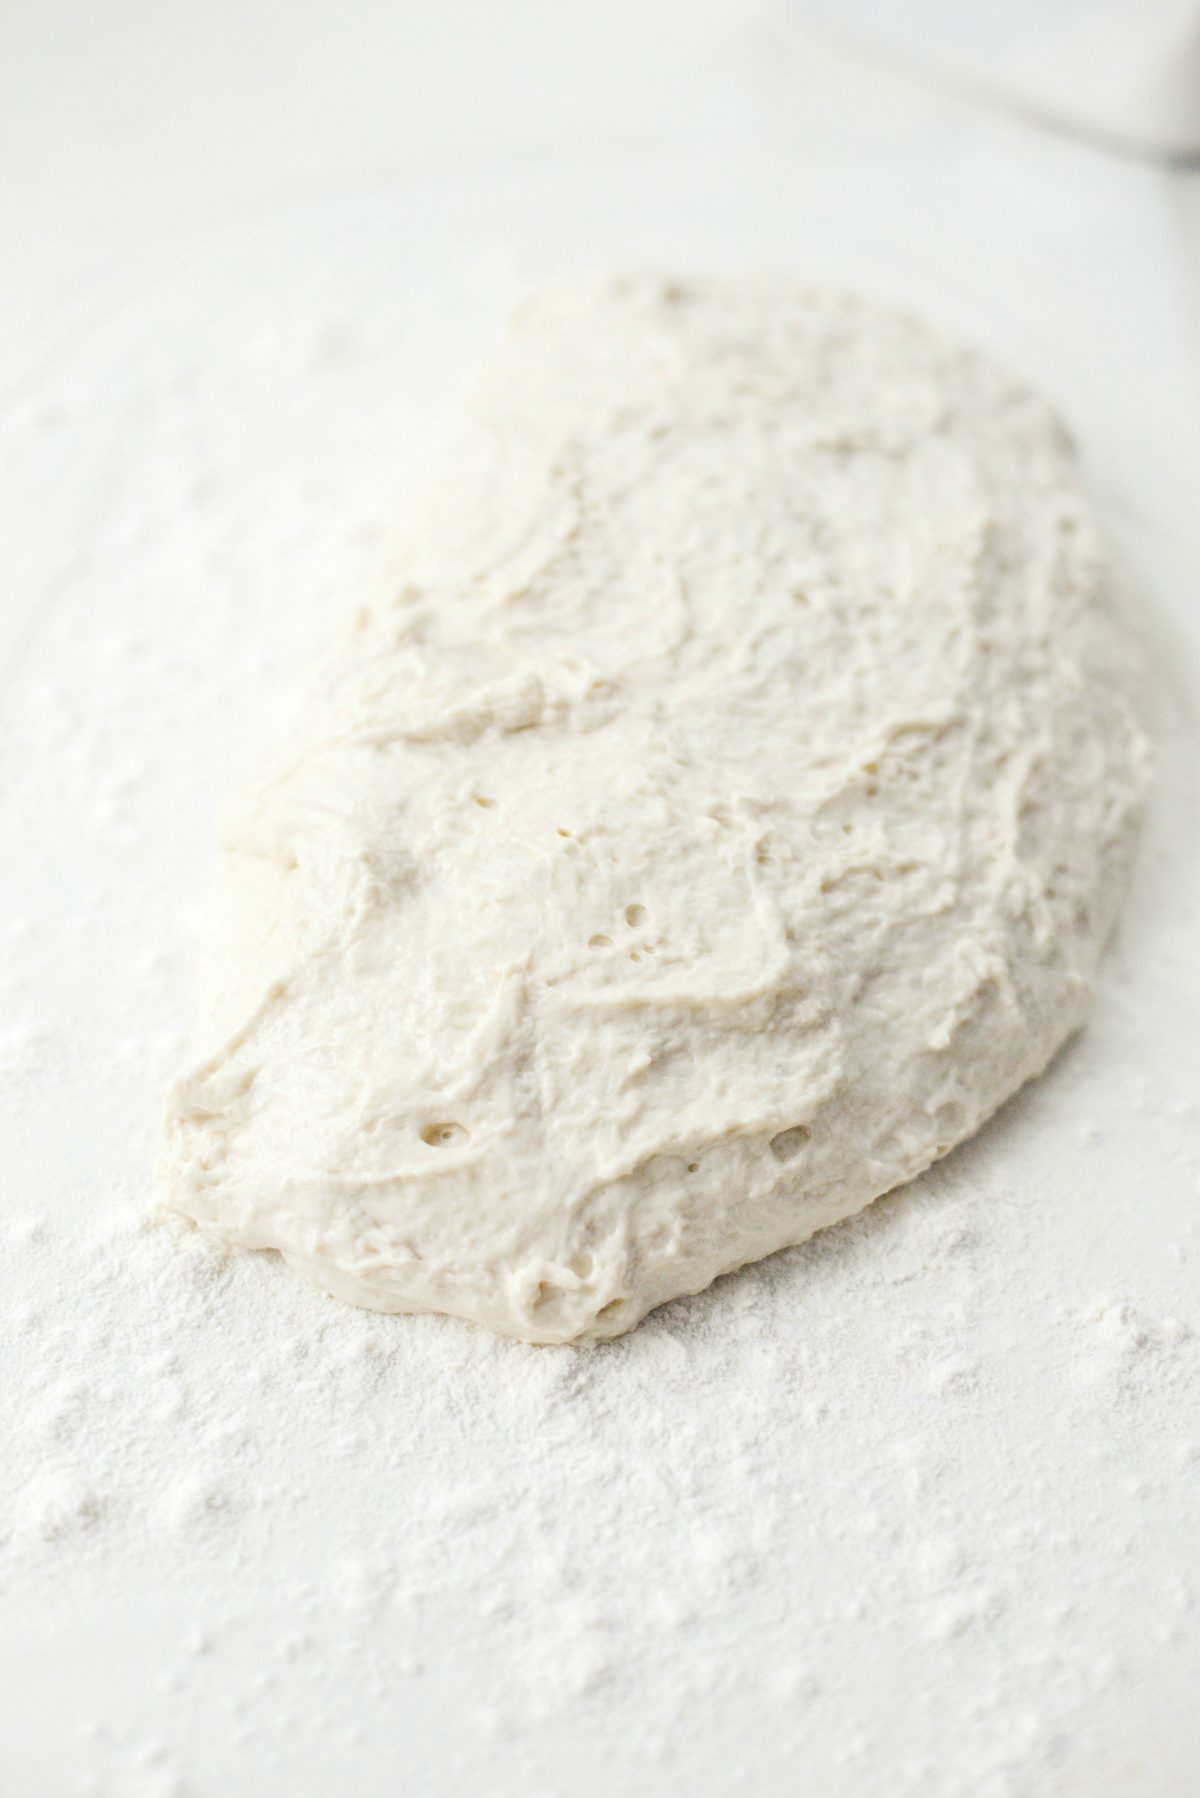 dough on floured plastic wrap